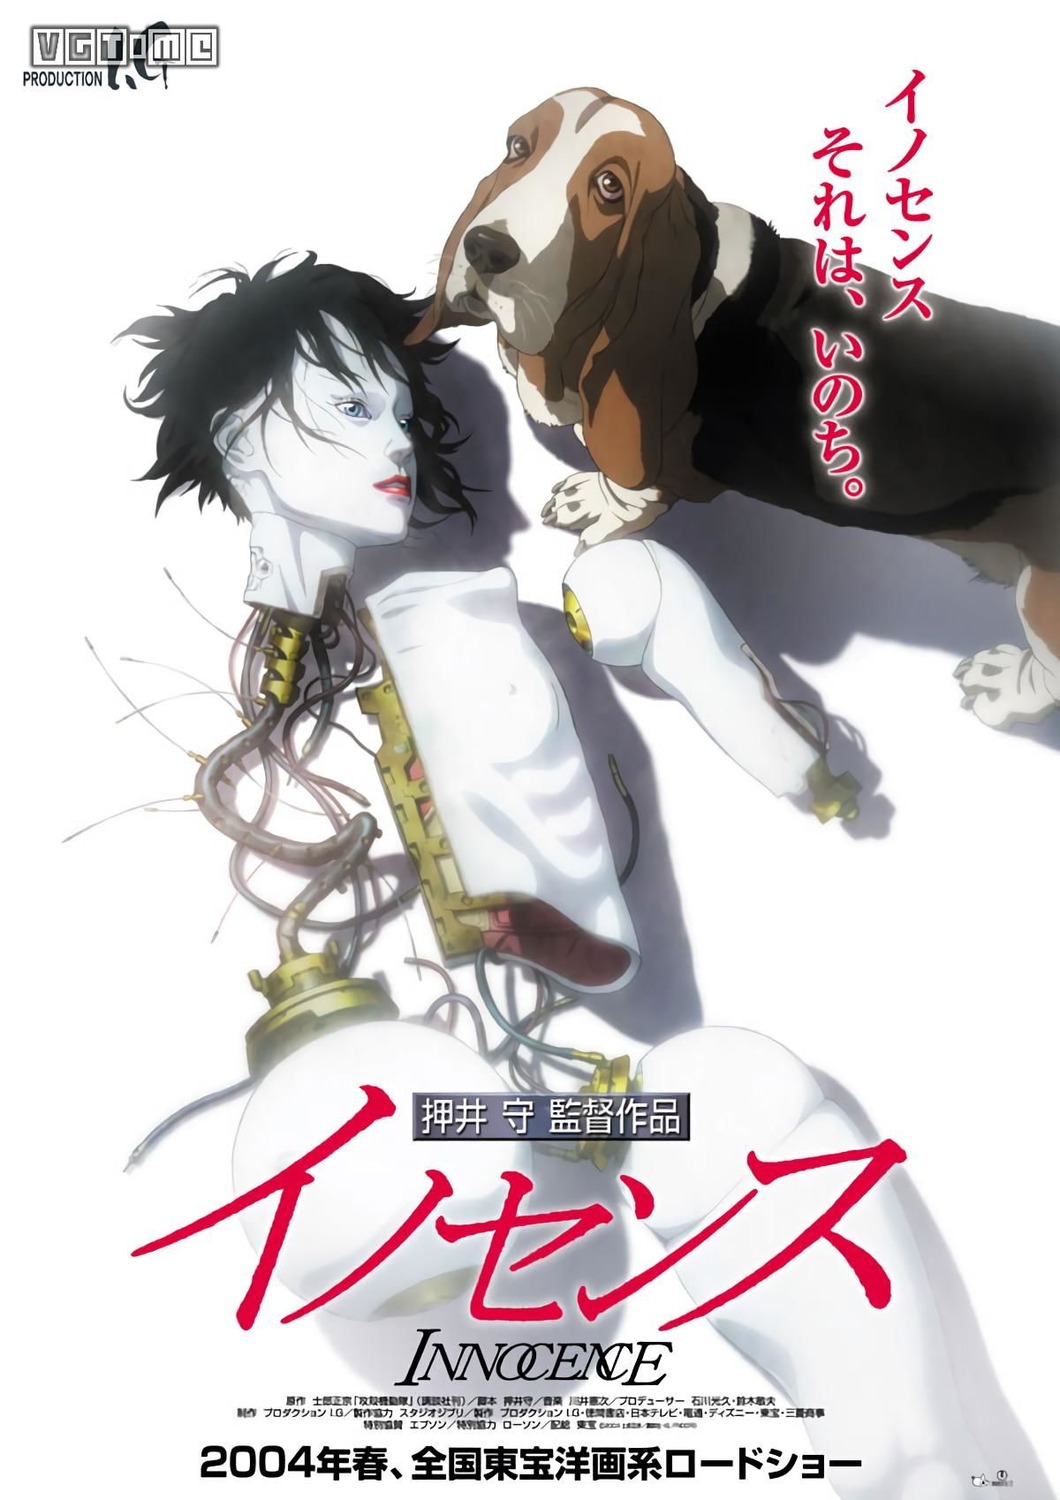 Extra Large Movie Poster Image for Inosensu: Innocence (#1 of 2)